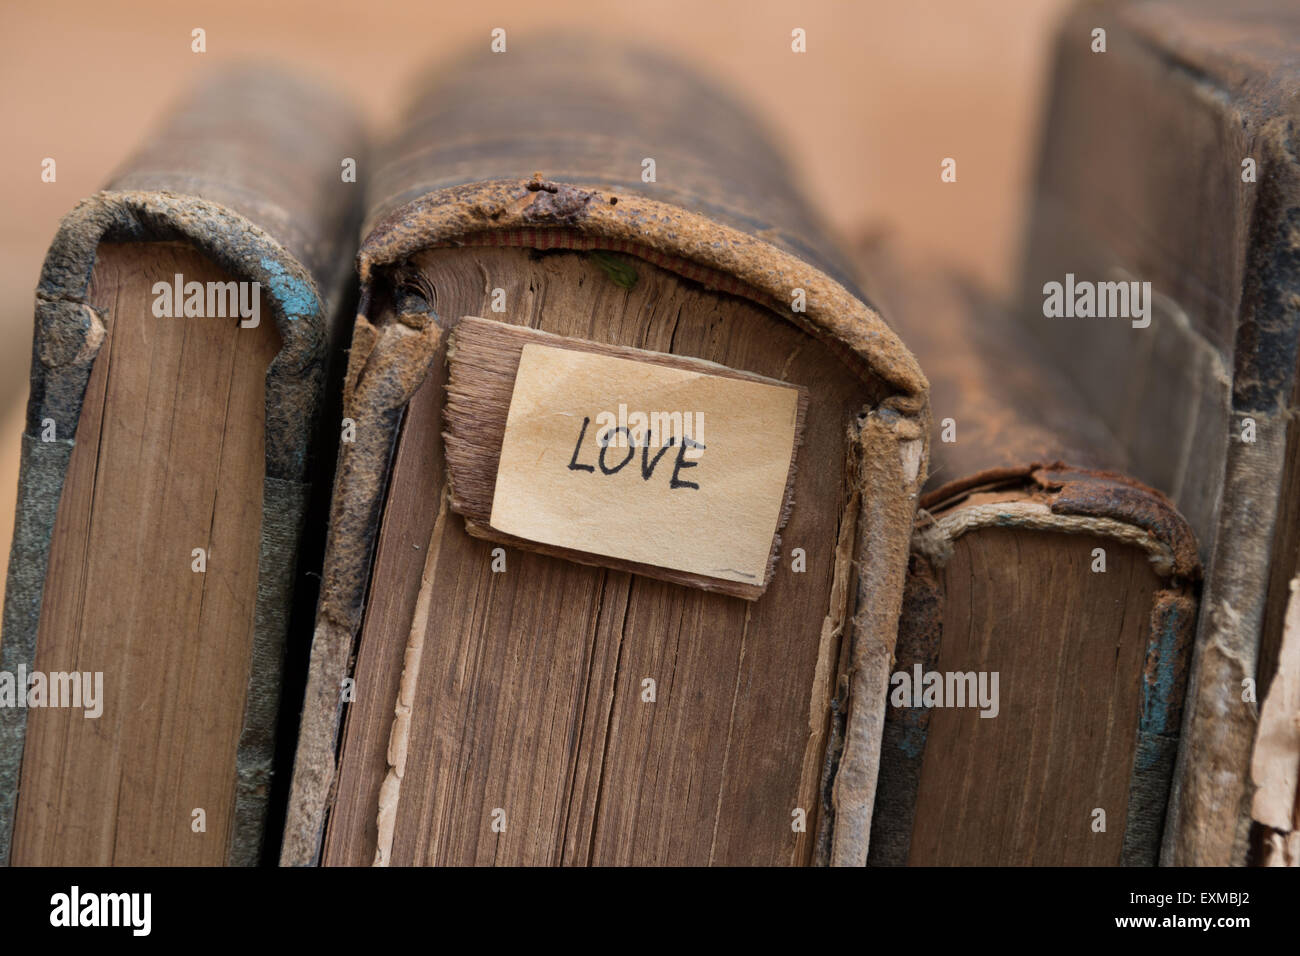 label Love and books. Learn, study idea Stock Photo